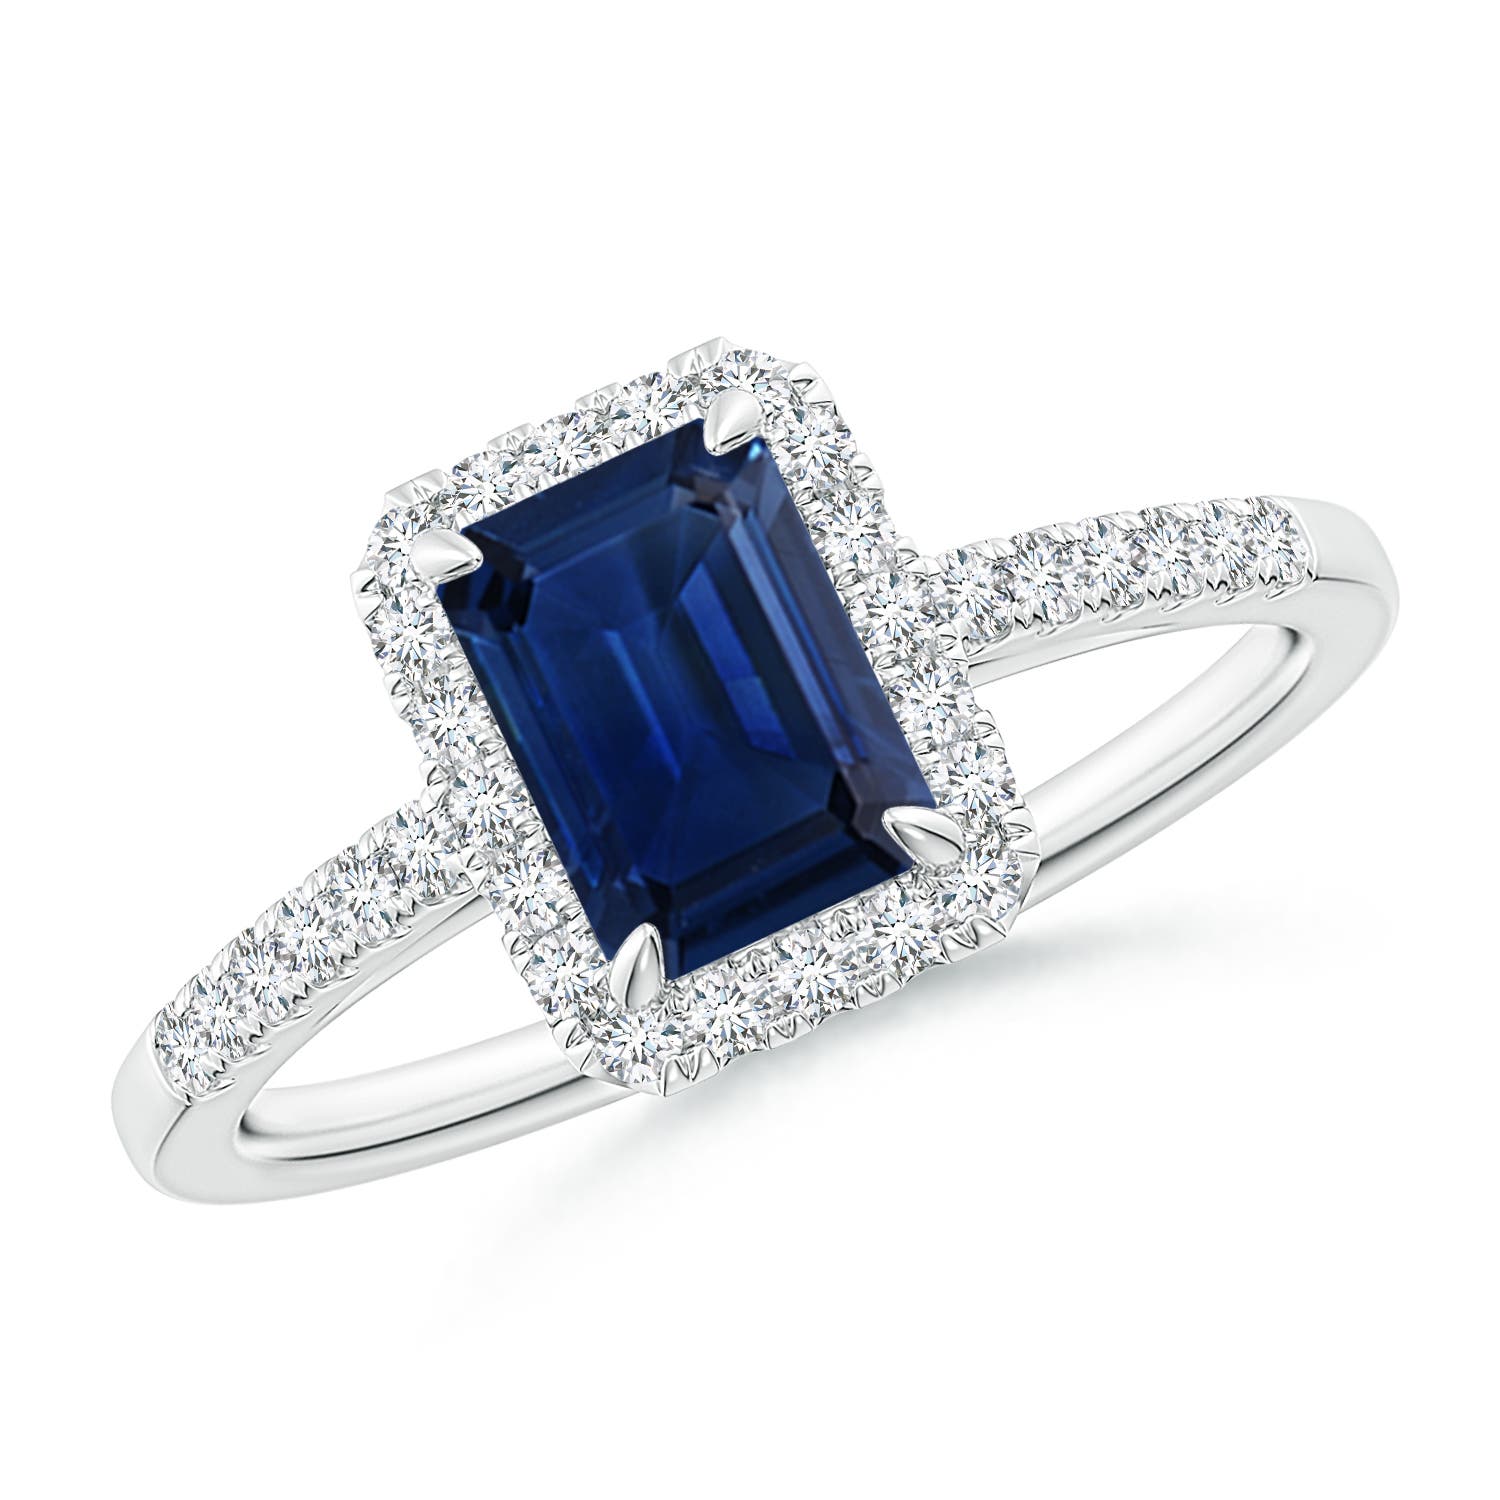 Emerald-Cut Sapphire Ring with Diamond Halo | Angara